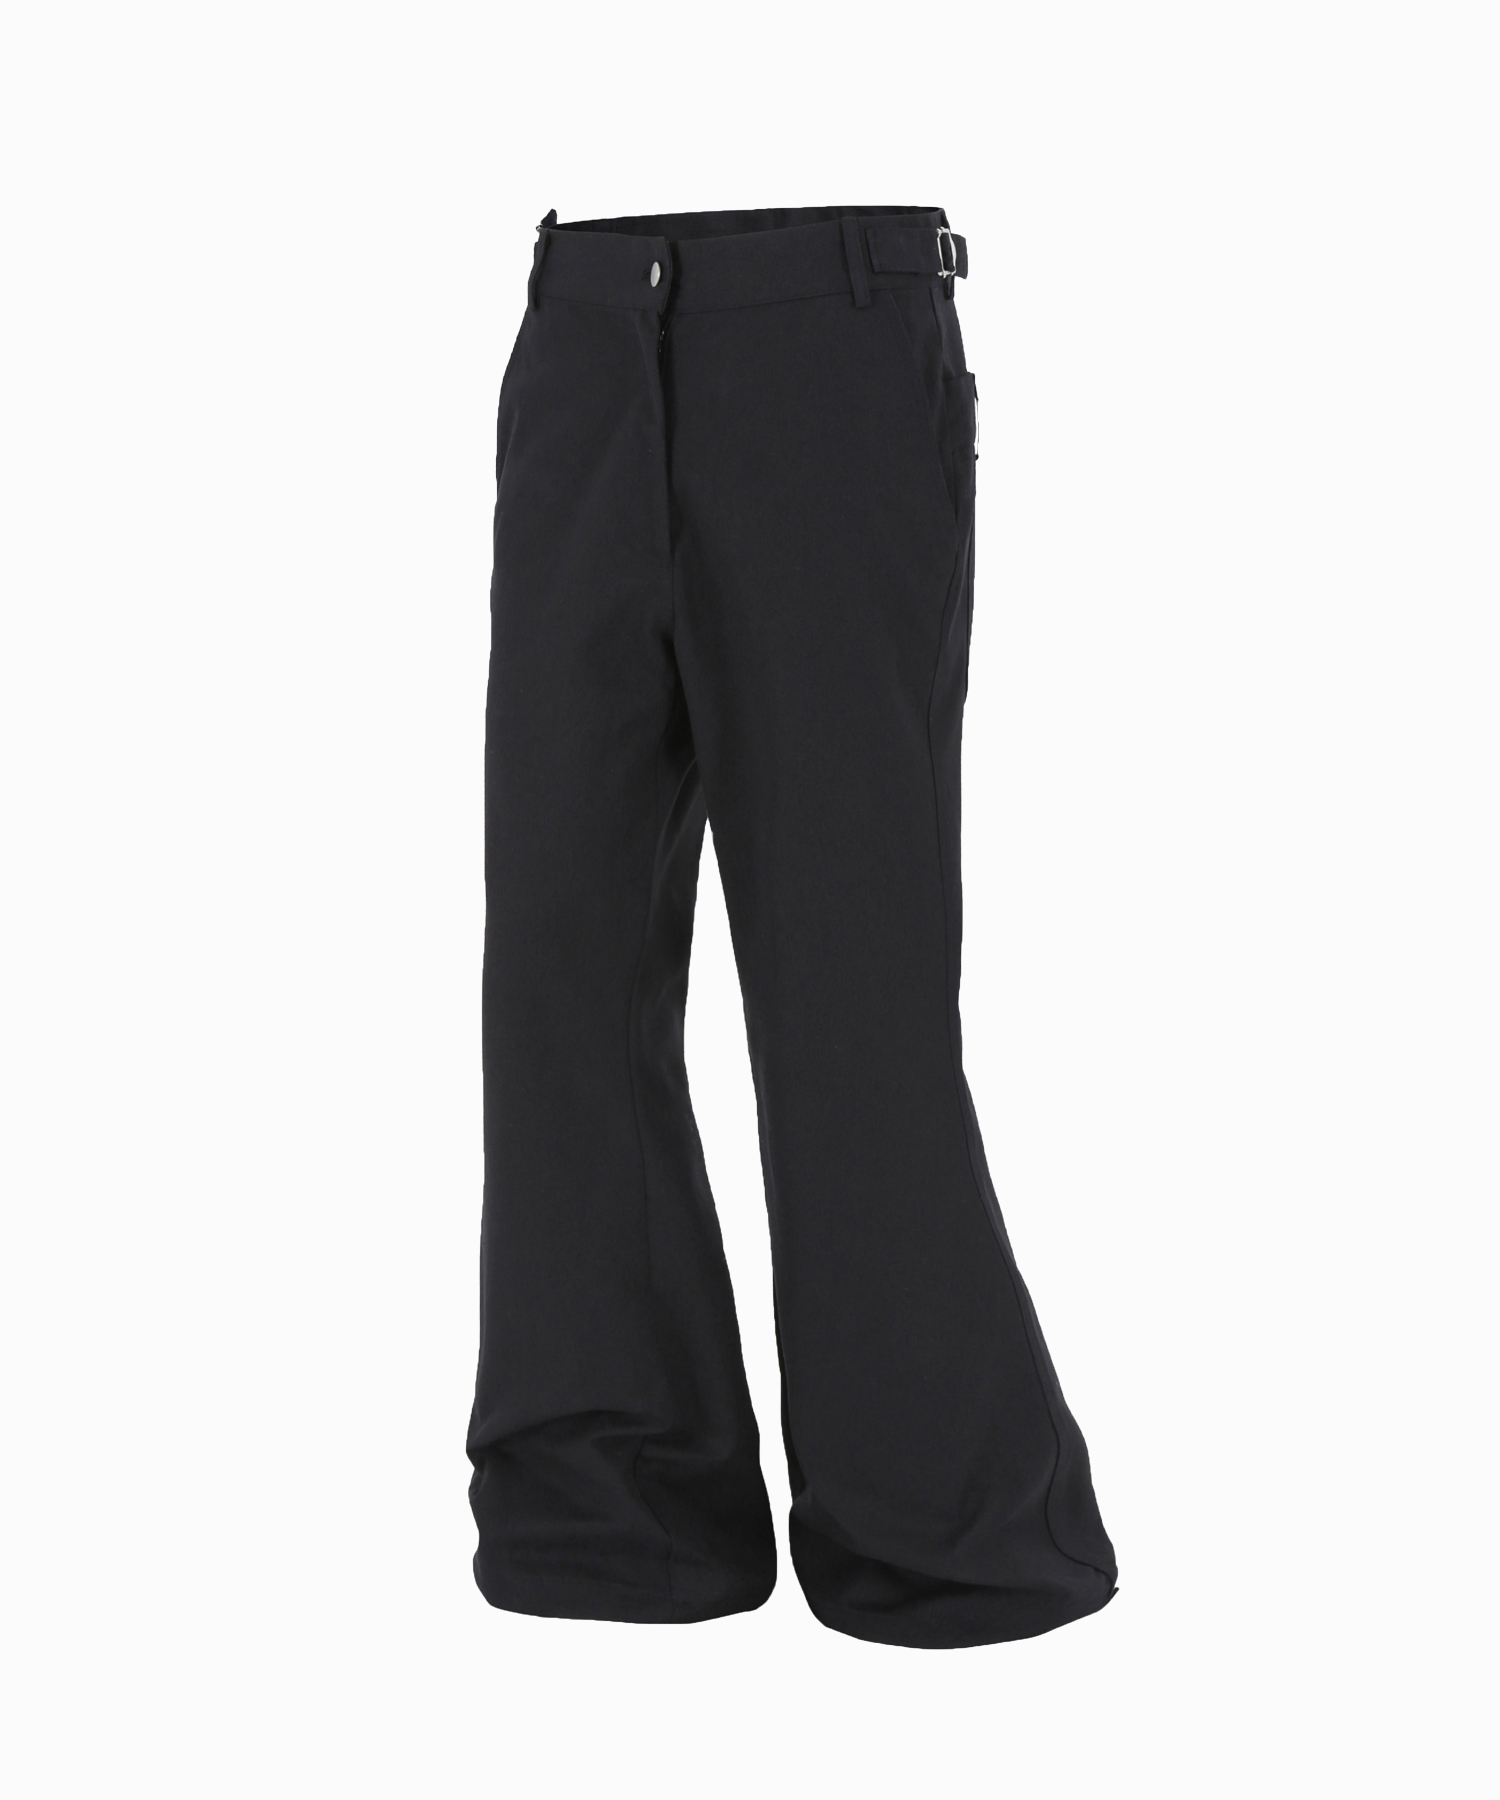 Double OB Flared pants black - 로어링라드(ROARINGRAD)